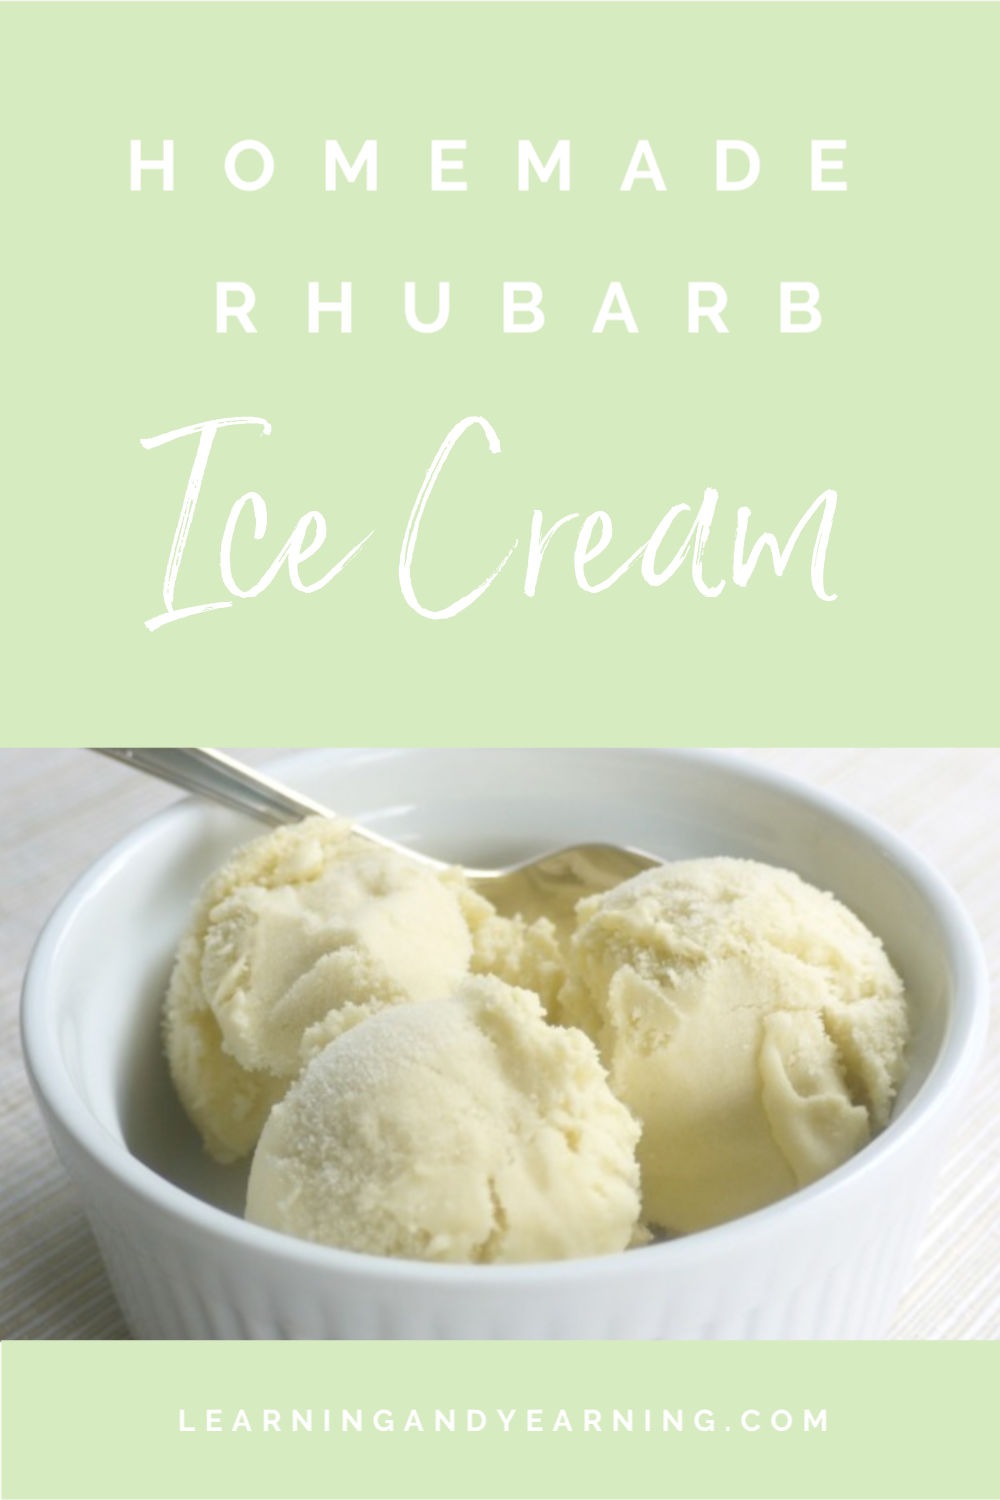 Homemade rhubarb ice cream!